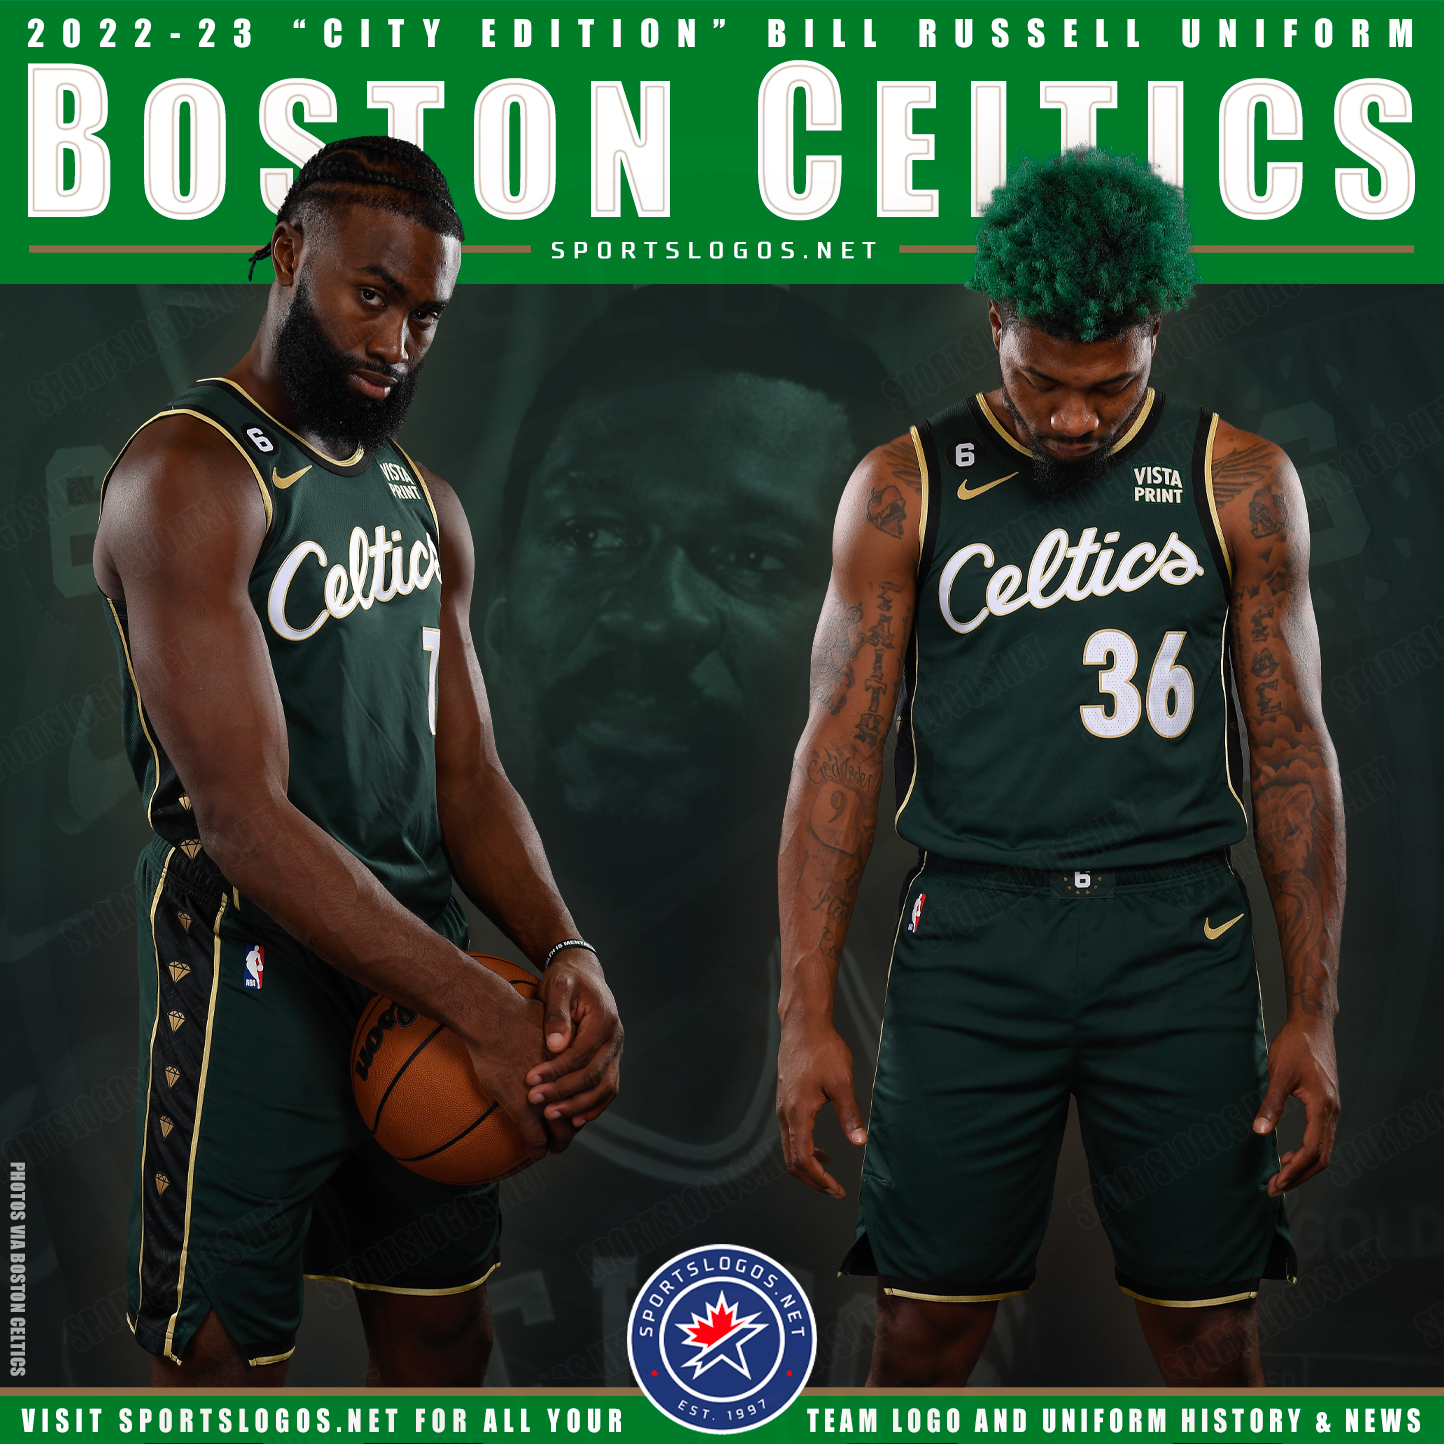 Detailed look at the Boston Celtics 2022-23 City Edition uniform